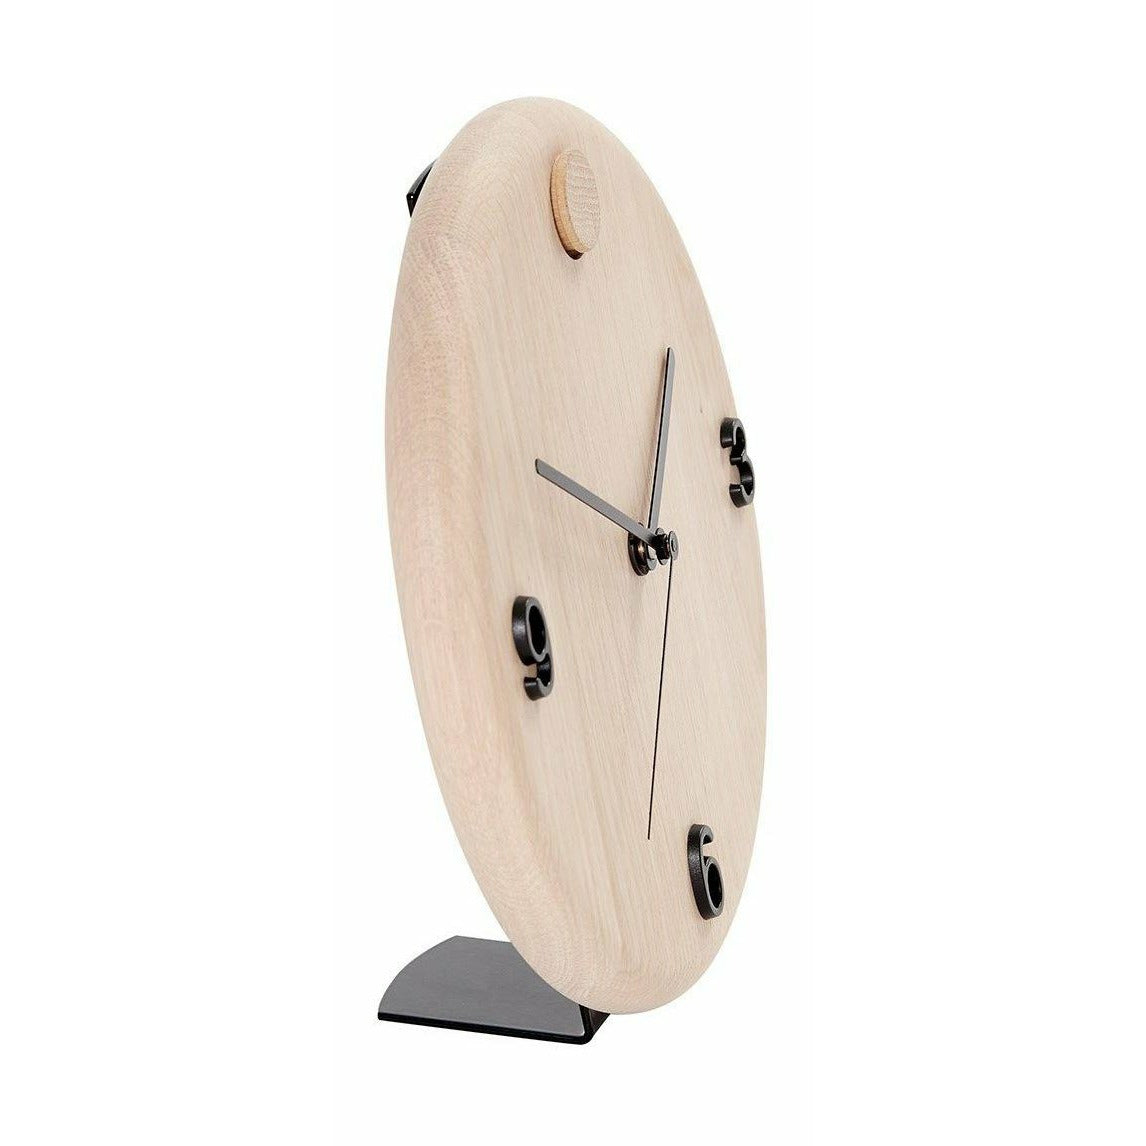 Andersen Furniture Holder For Wood Time Watch, Black